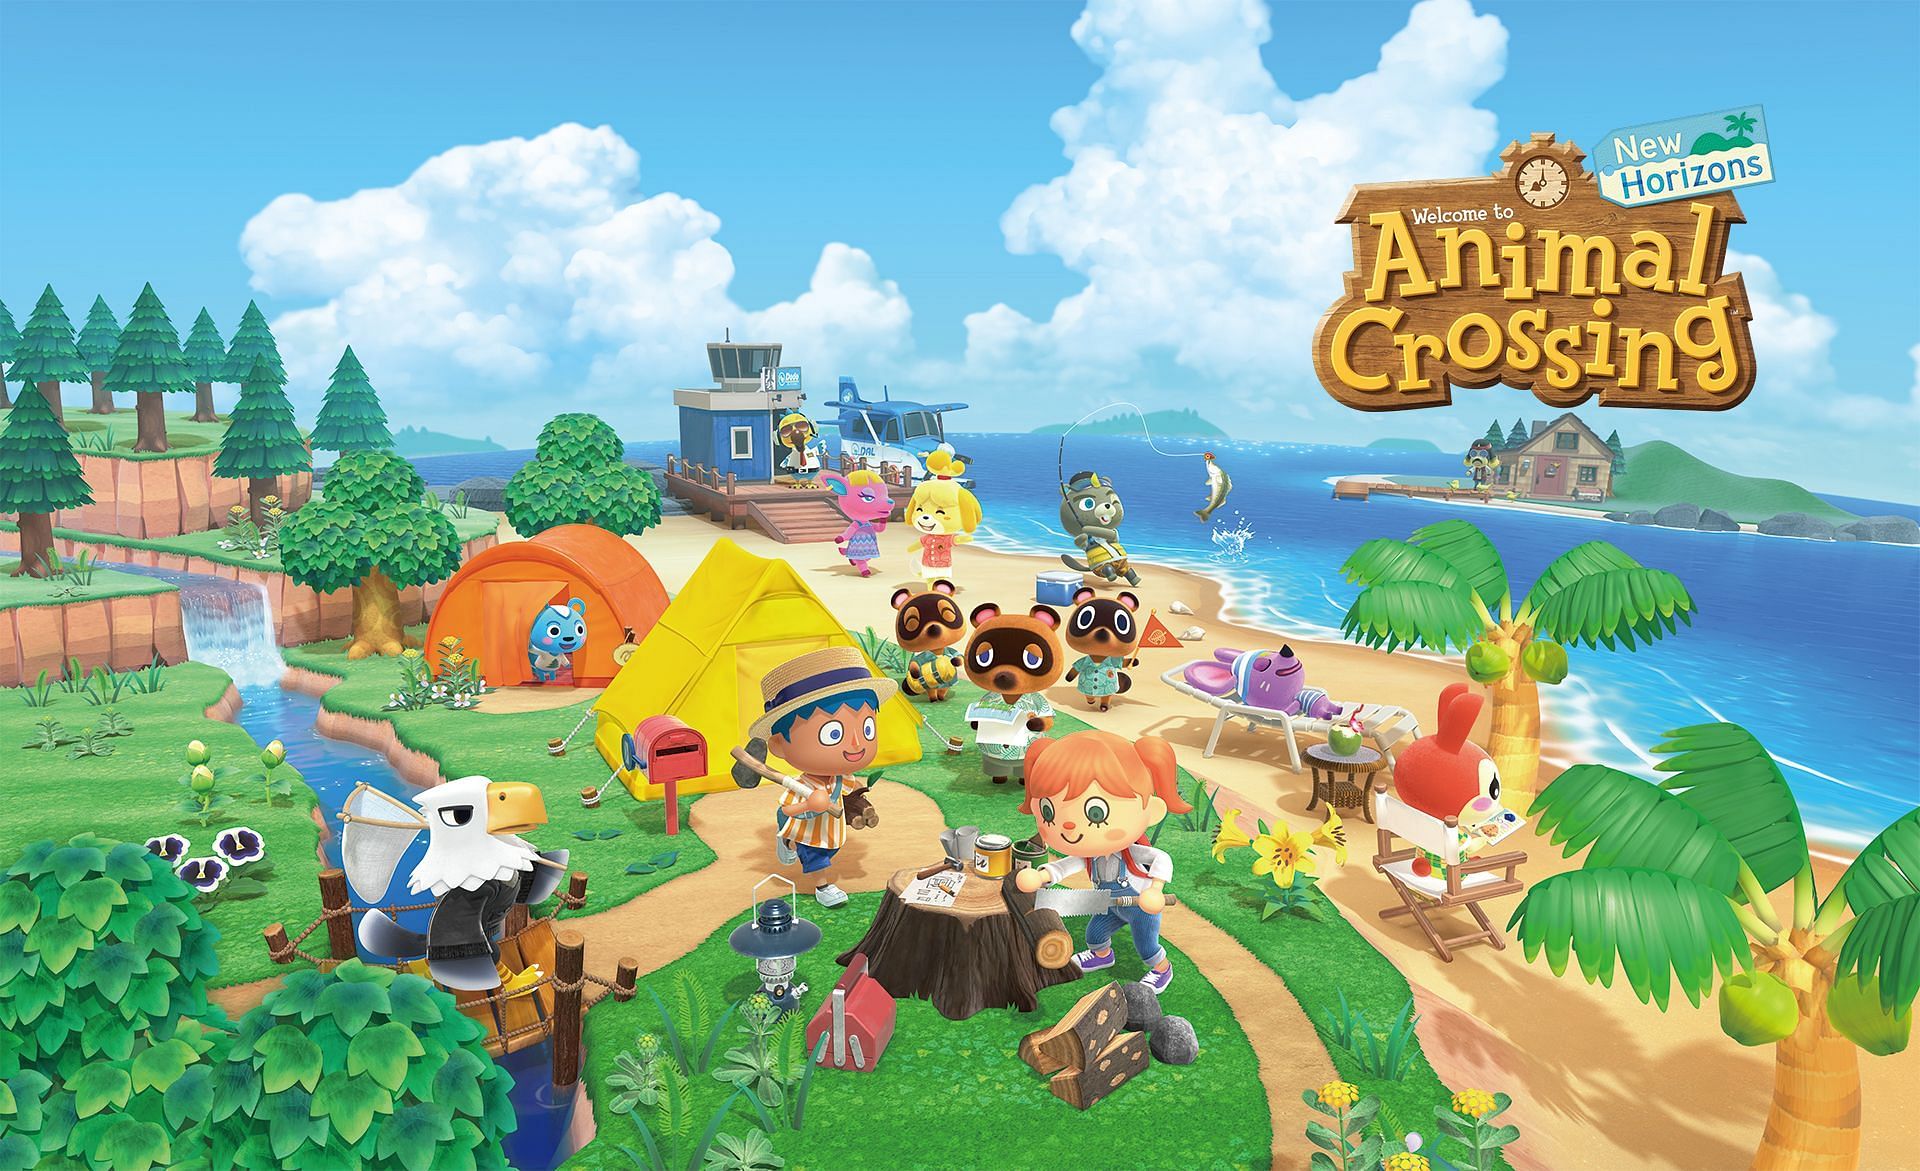 Animal Crossing: New Horizons allows players to explore their creative side (Image via Nintendo)